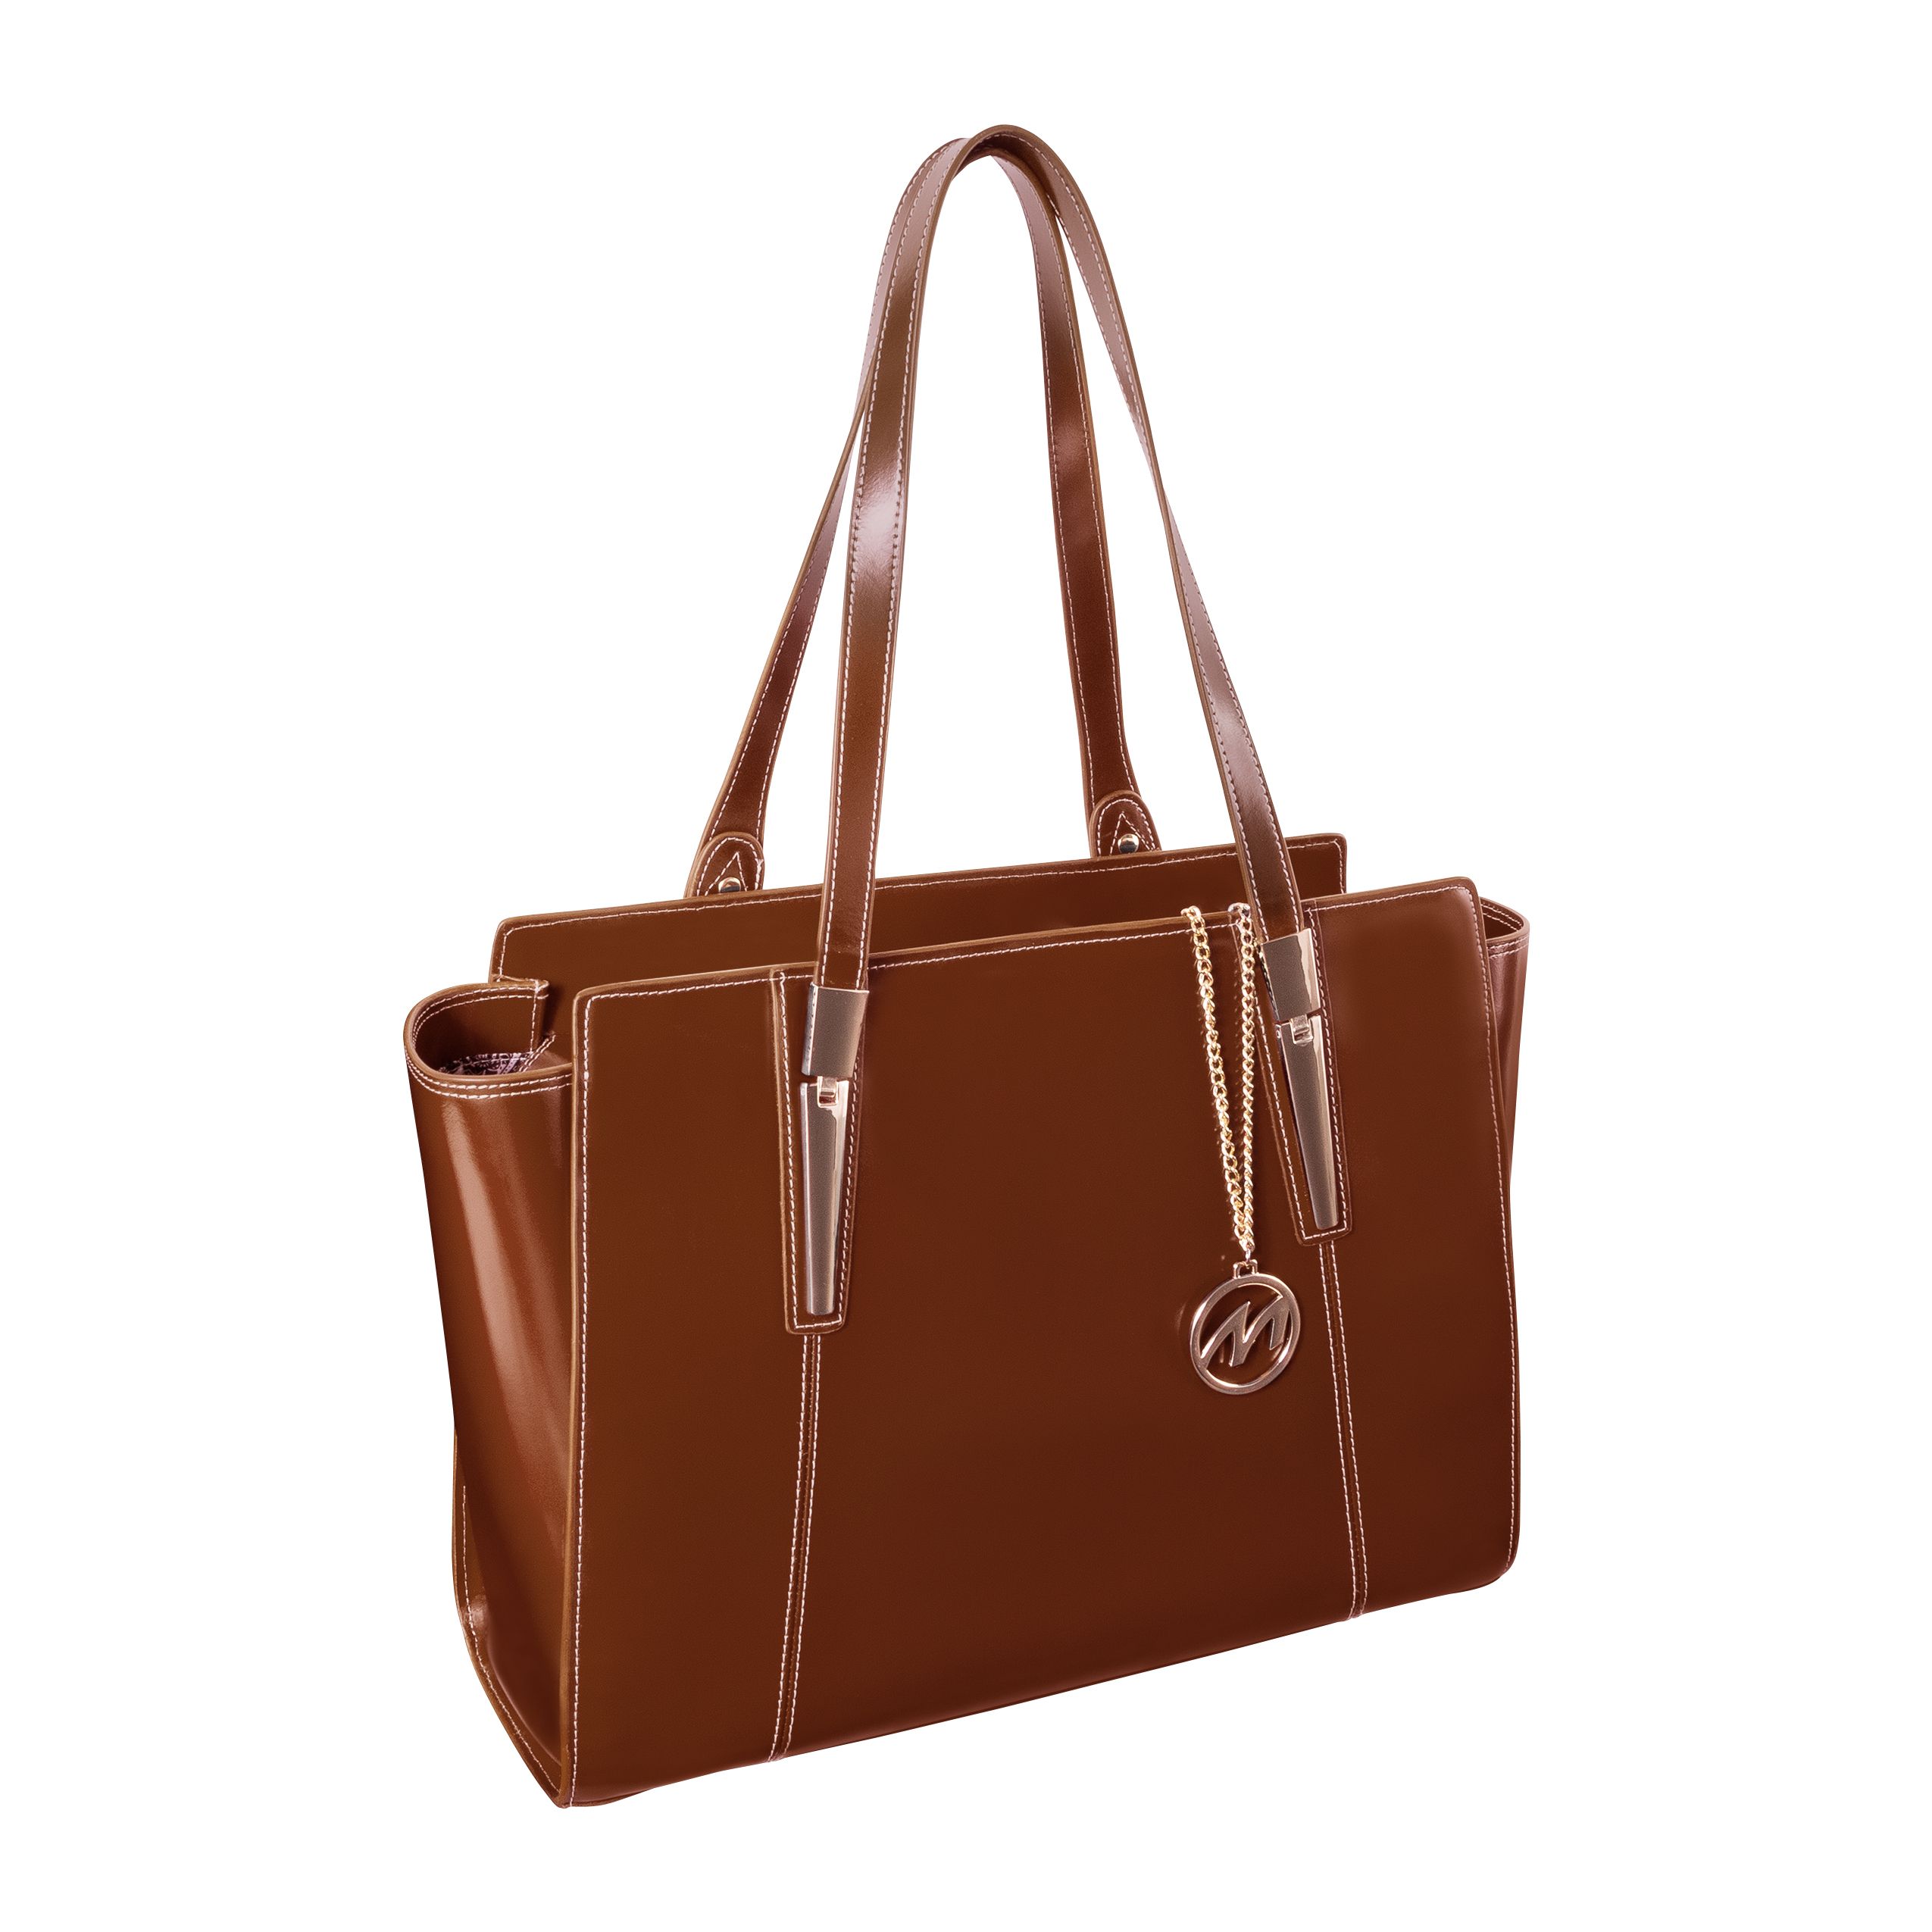 Mcklein 97504 Aldora Leather Shoulder Tote Bag, Brown - 16 X 5.5 X 12 In.